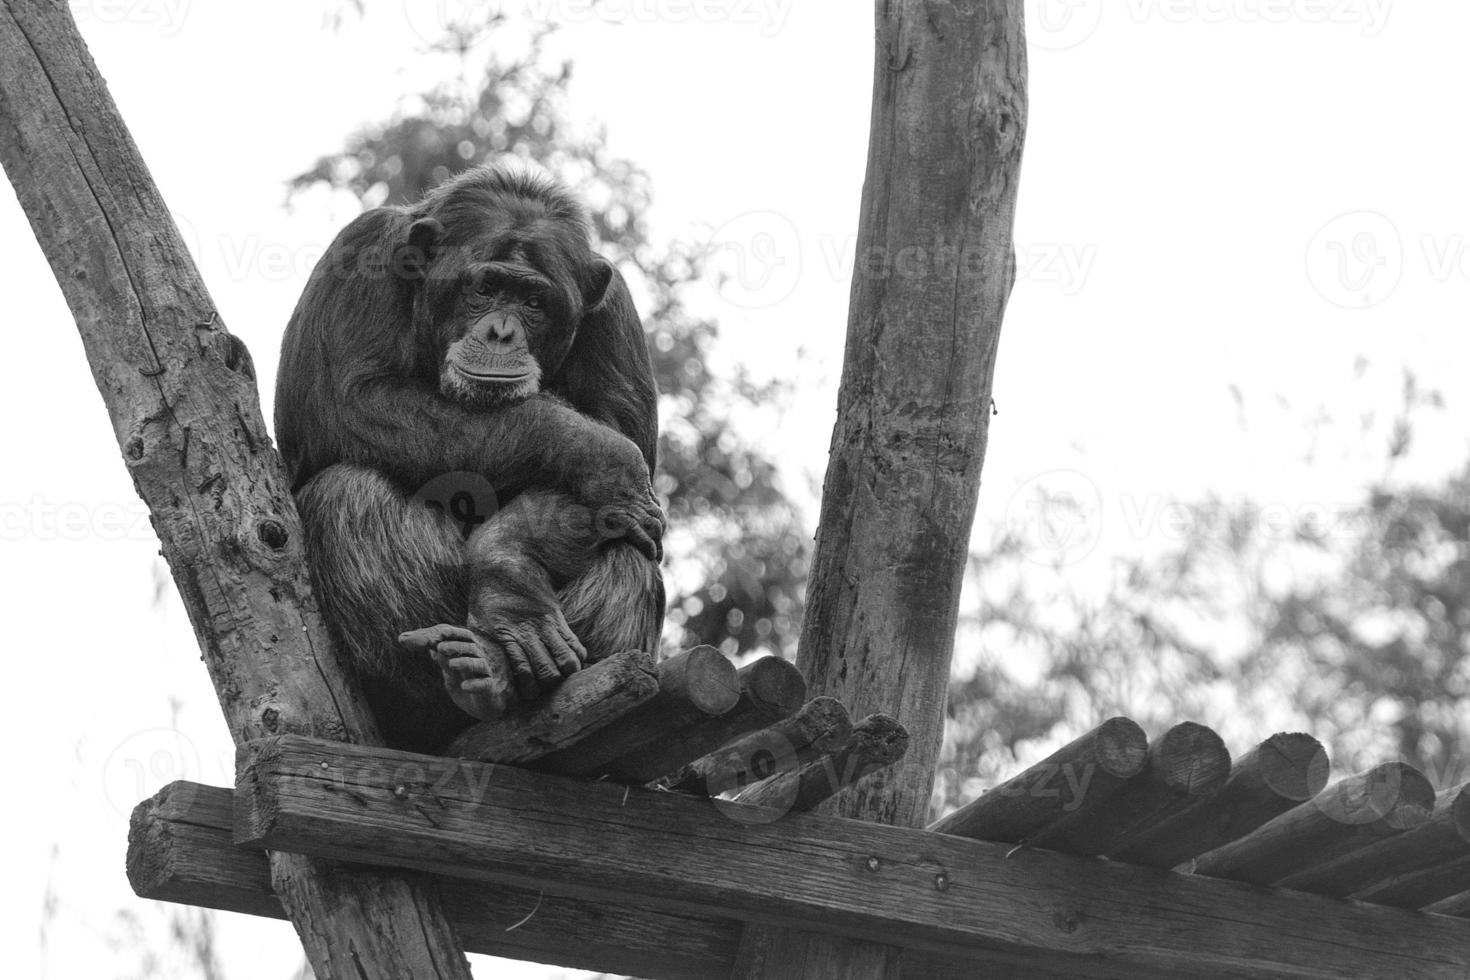 apa schimpans apa i svart och vit foto